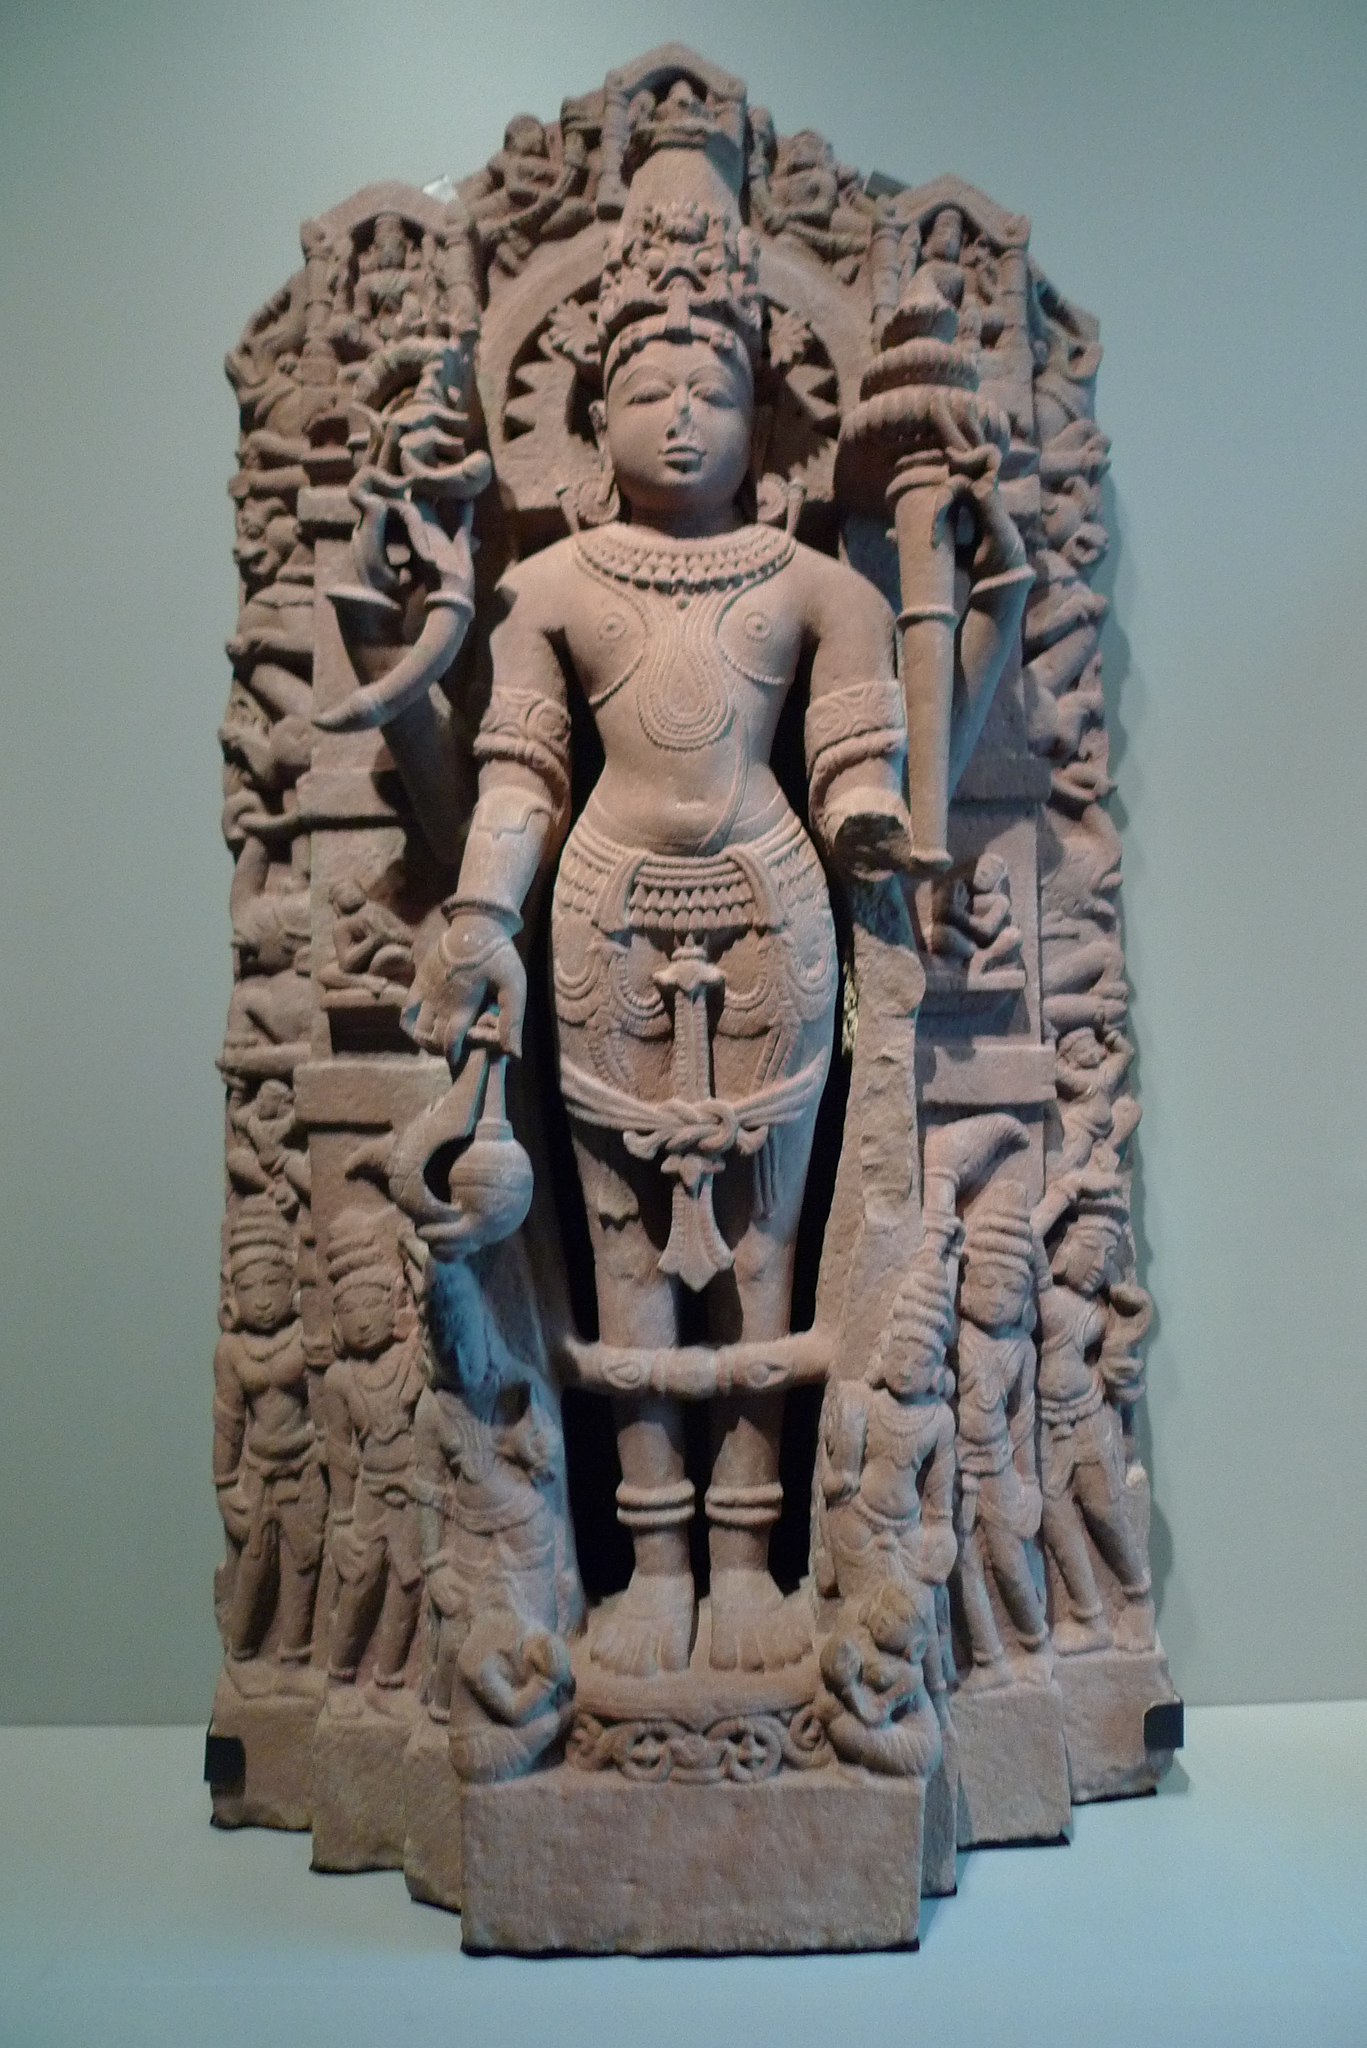 Indian art - Wikipedia